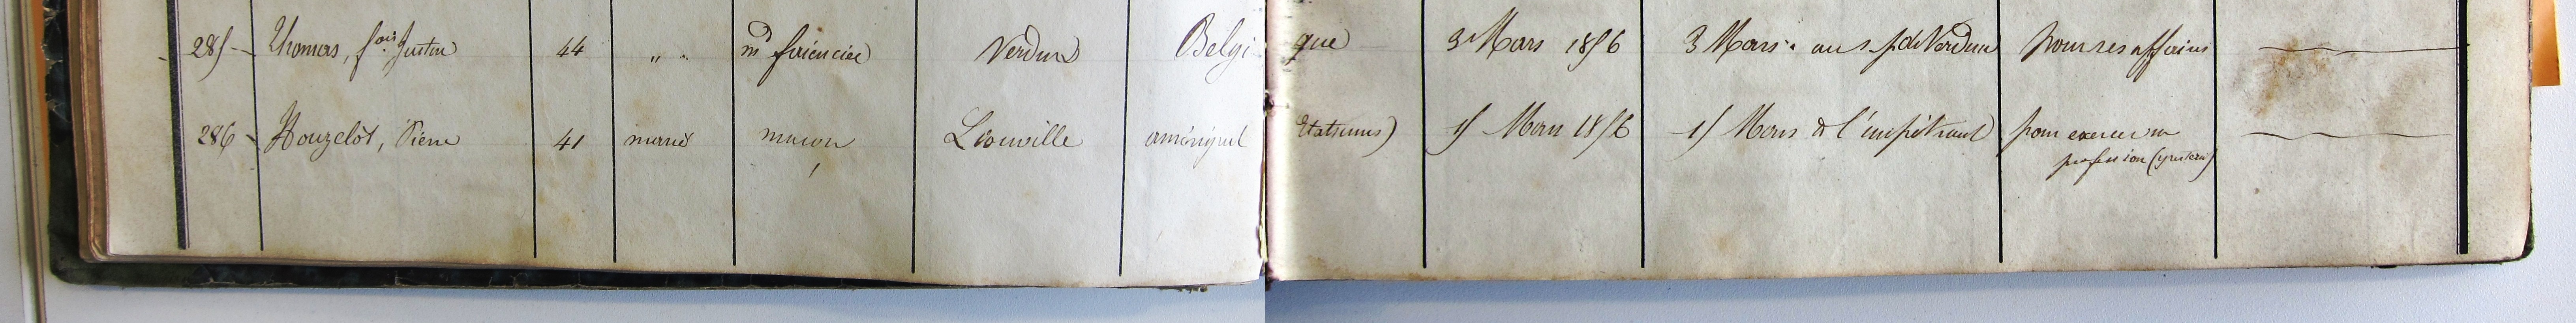 Passport application for Pierre Houzelot in 1856